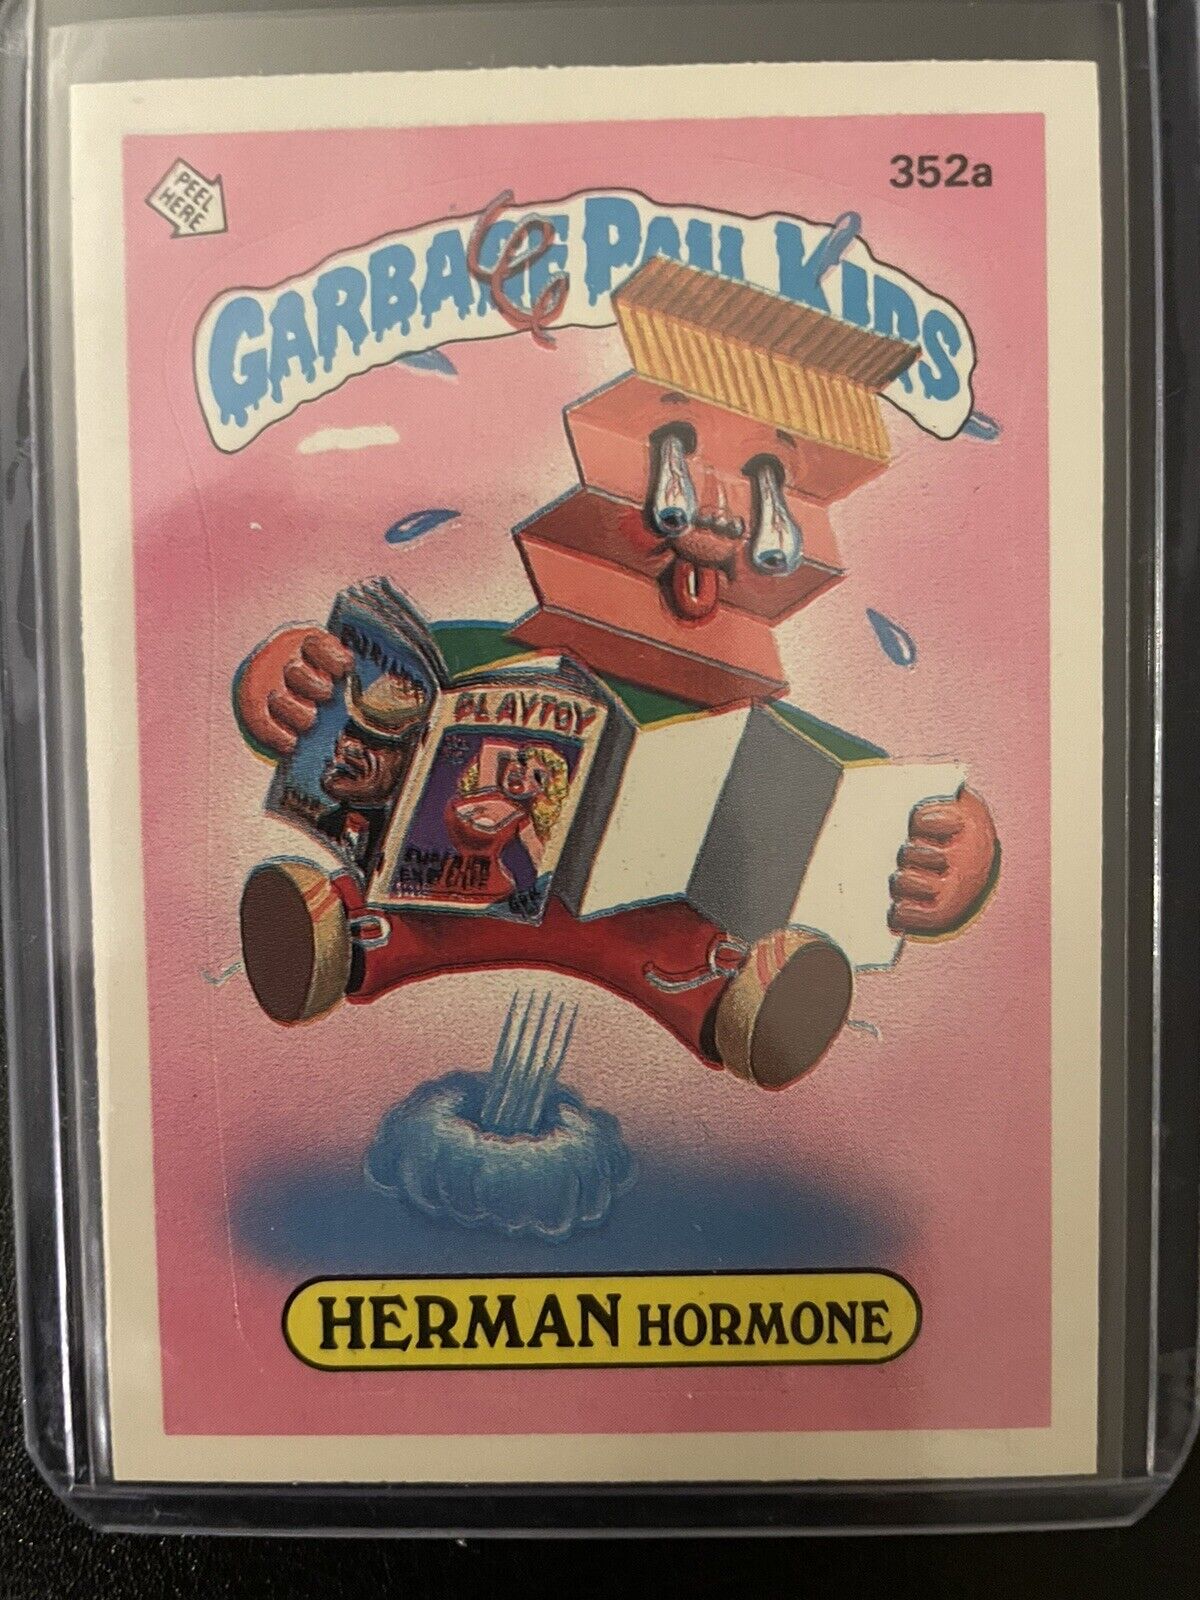 Garbage Pail Kids Herman Hormone 352a *WHITE CLOUD ERROR* GPK